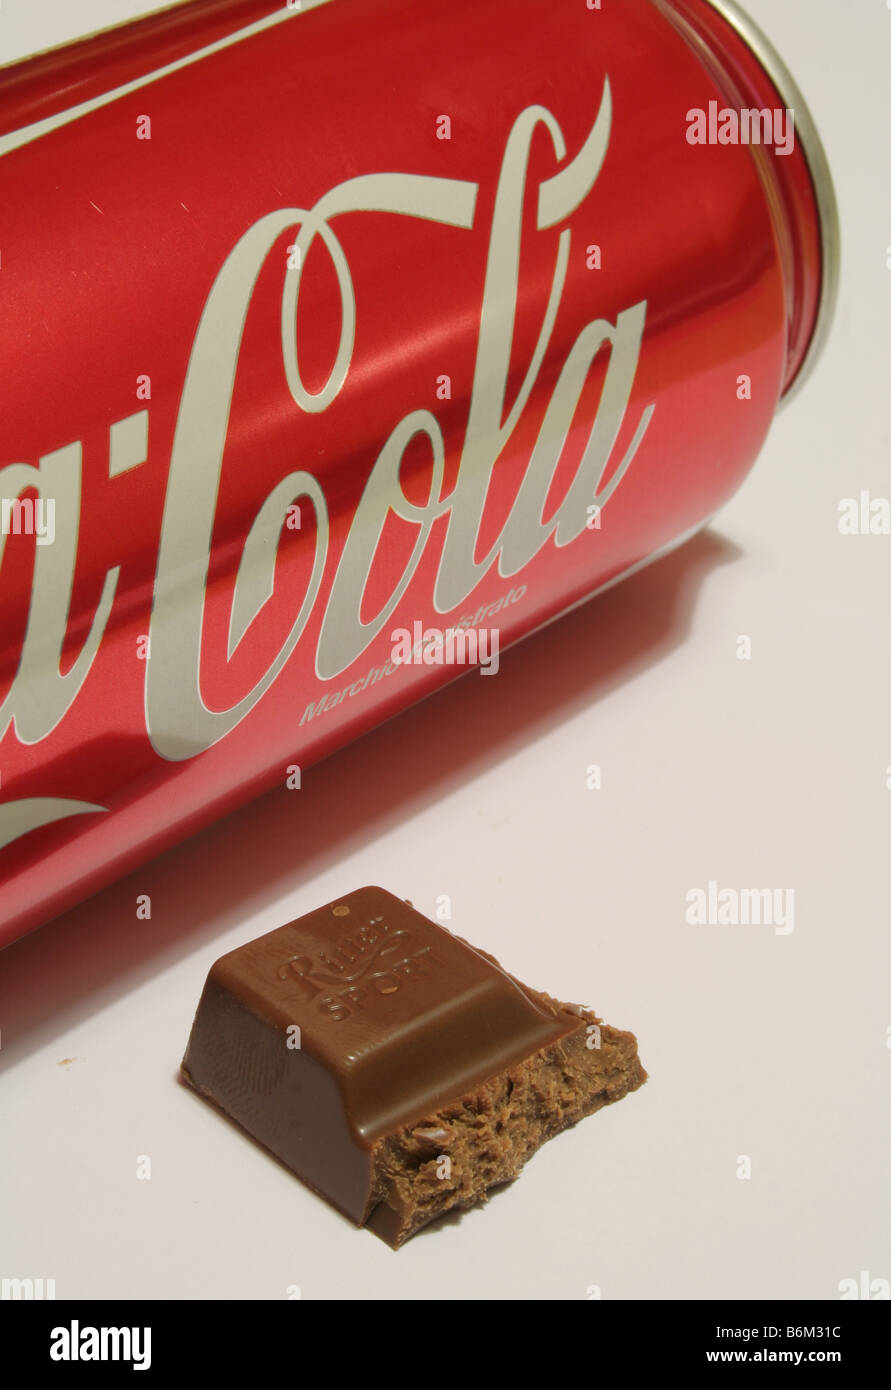 Stück Schokolade und Coca Cola Dose Stockfotografie - Alamy